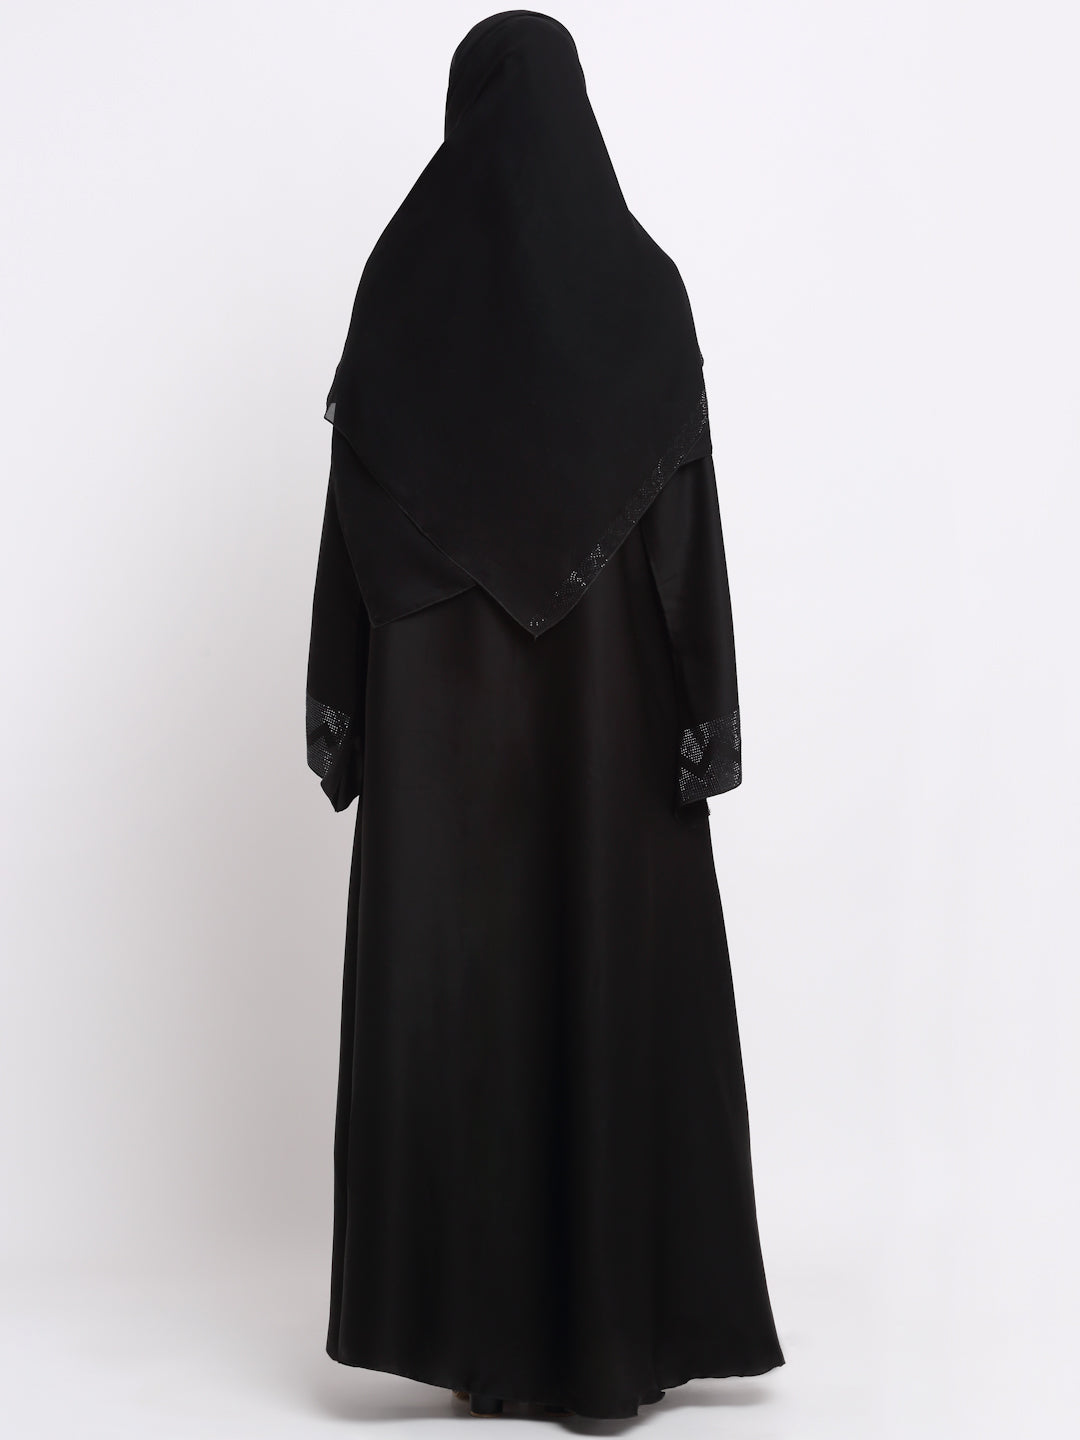 Klotthe Women Black Solid Burqa with Scarf